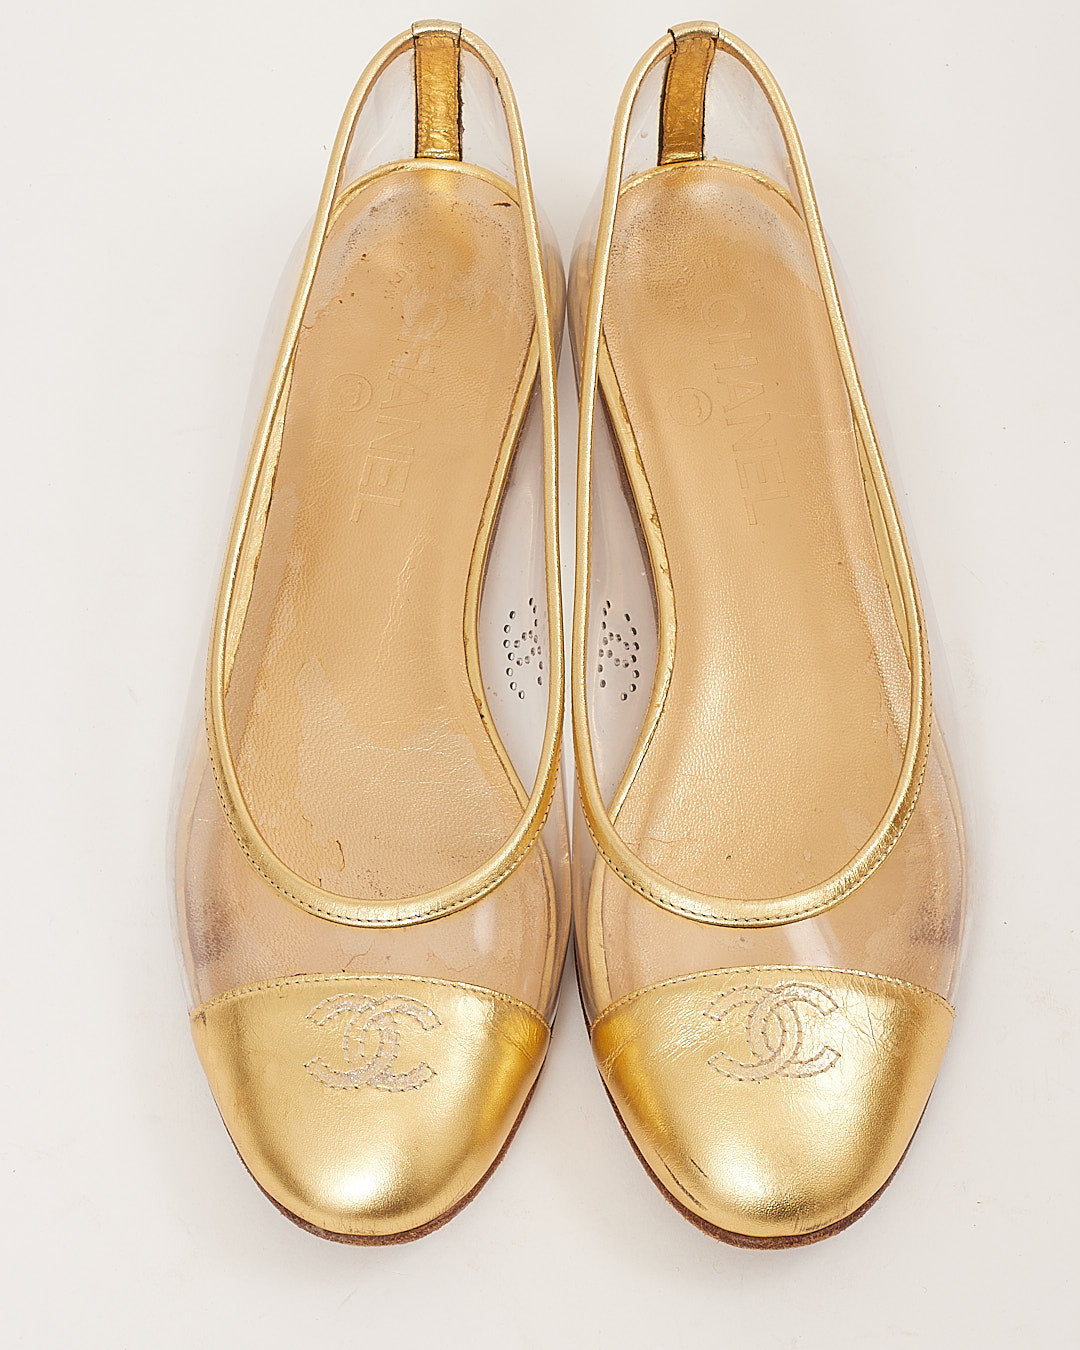 Chanel Gold PVC Ballerina CC Logo Flats - 38